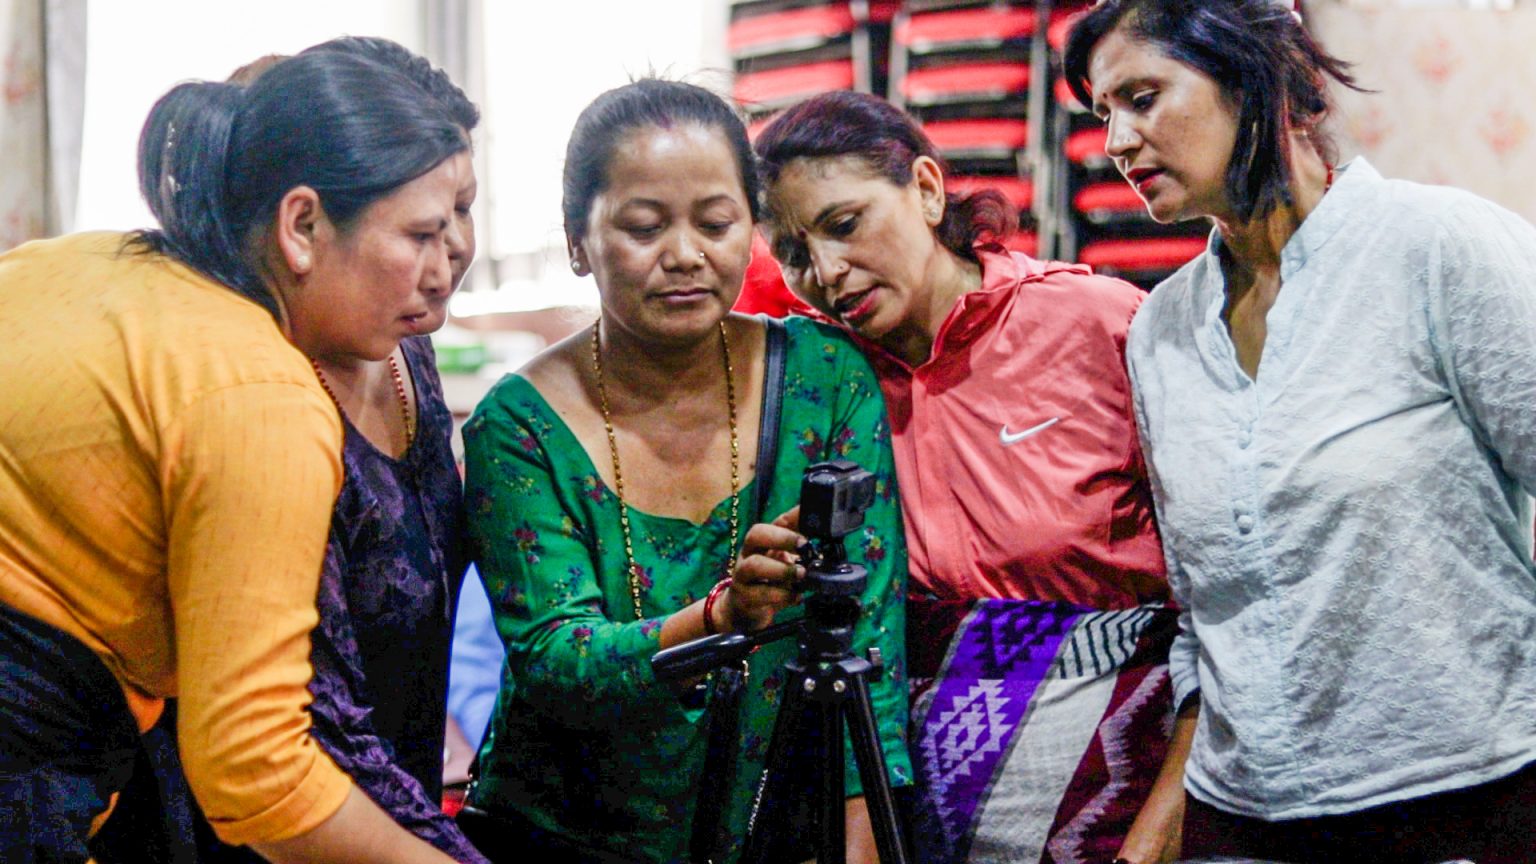 Five Nepali women in saris examining a camera on a tripod